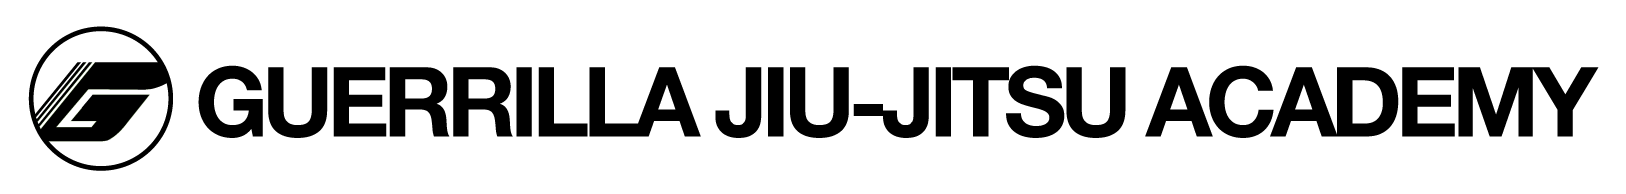 Guerrilla Jiu-Jitsu